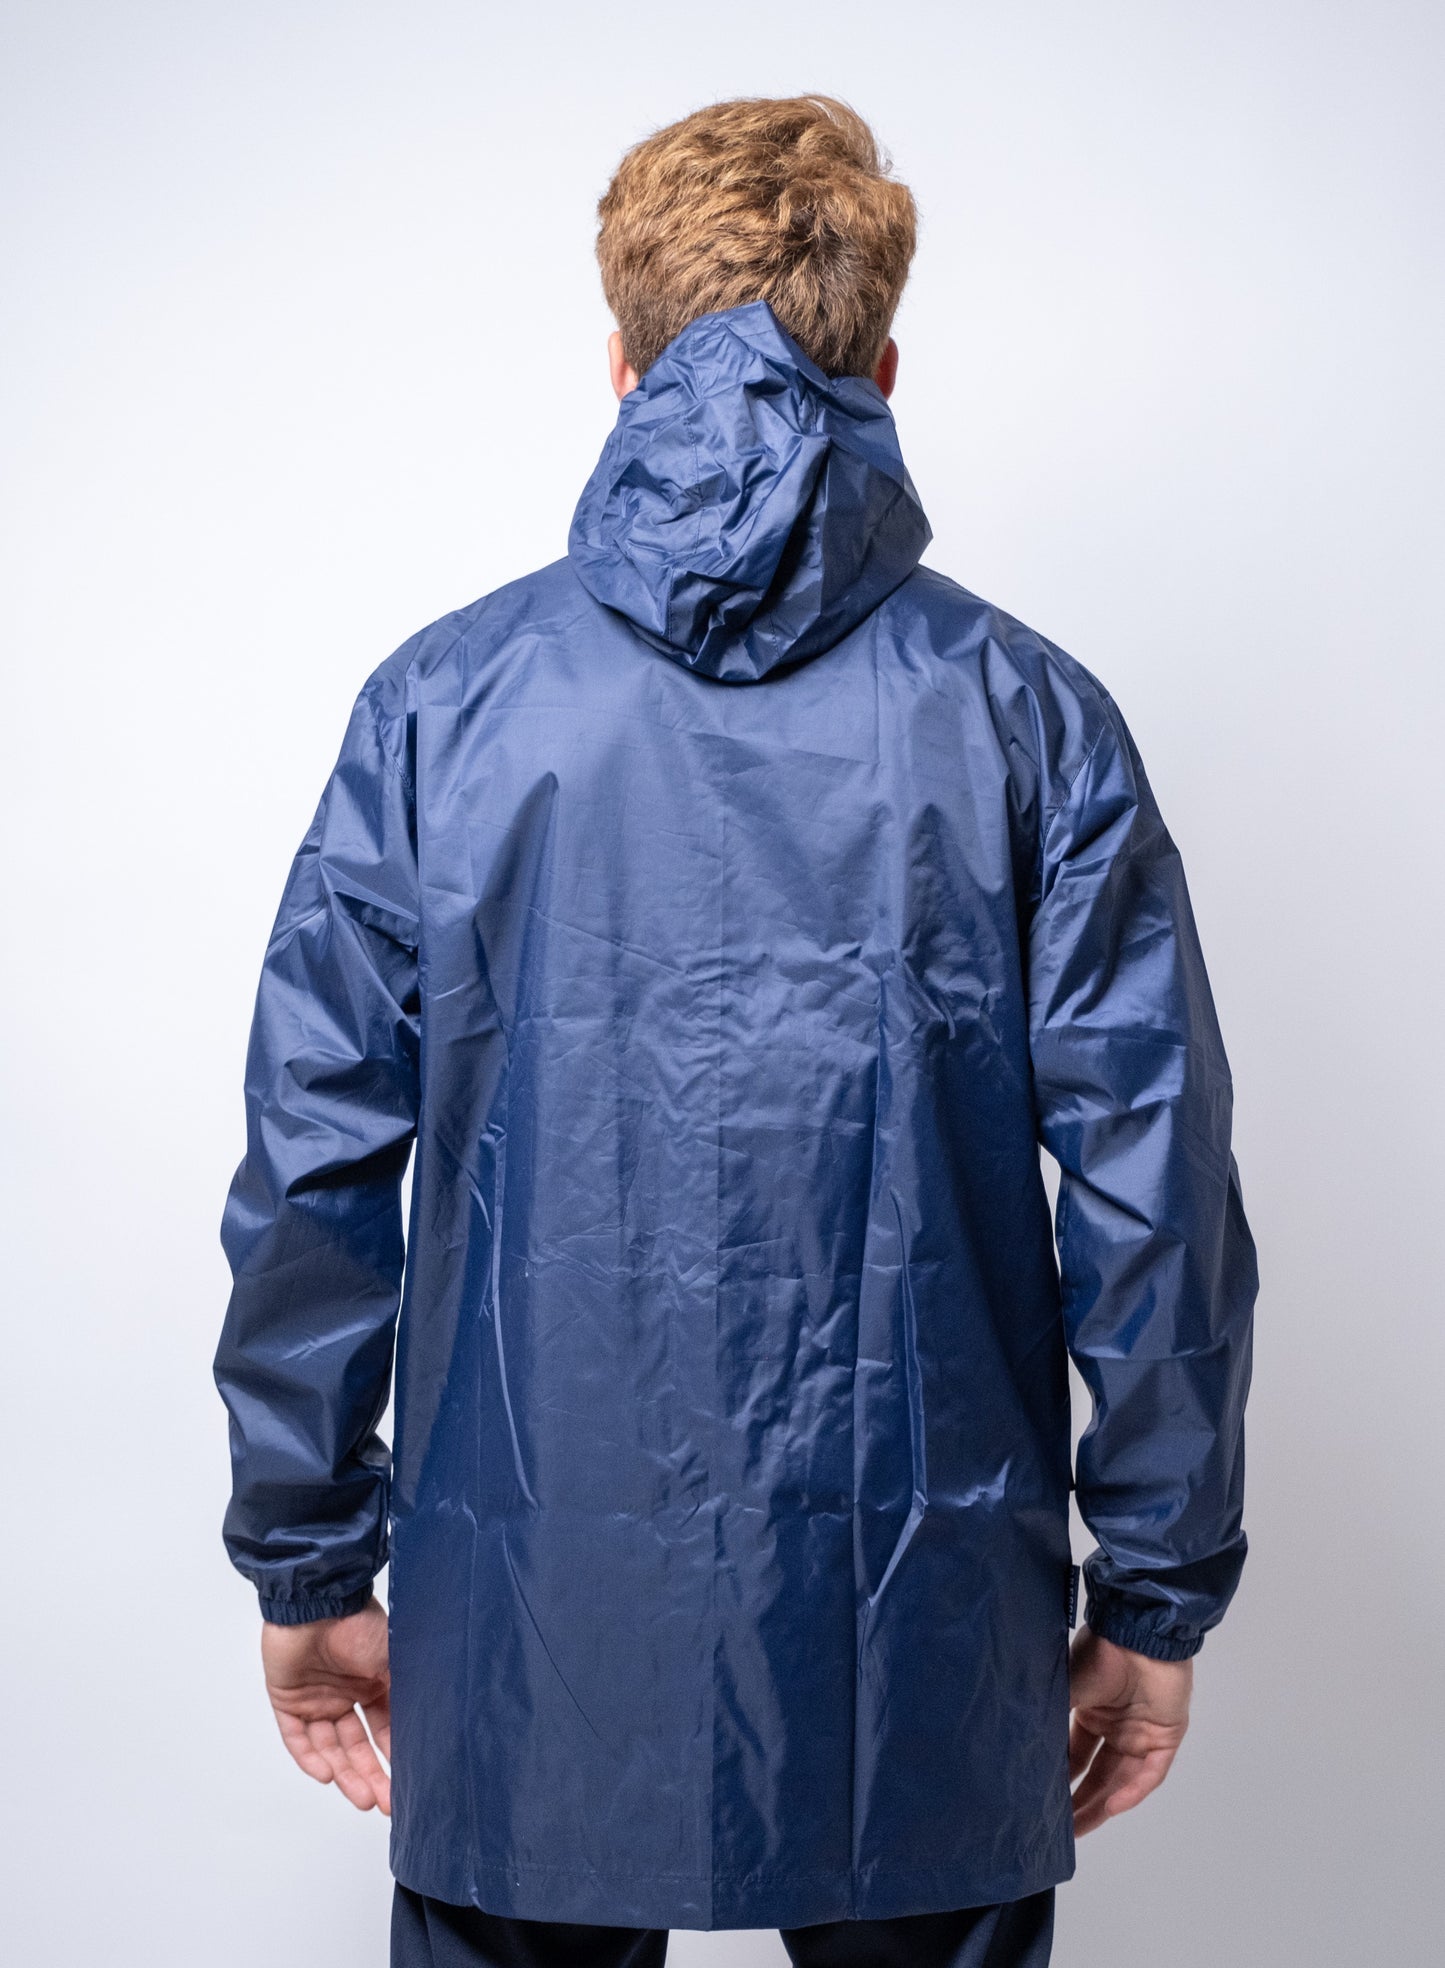 Authentic Rain Jacket